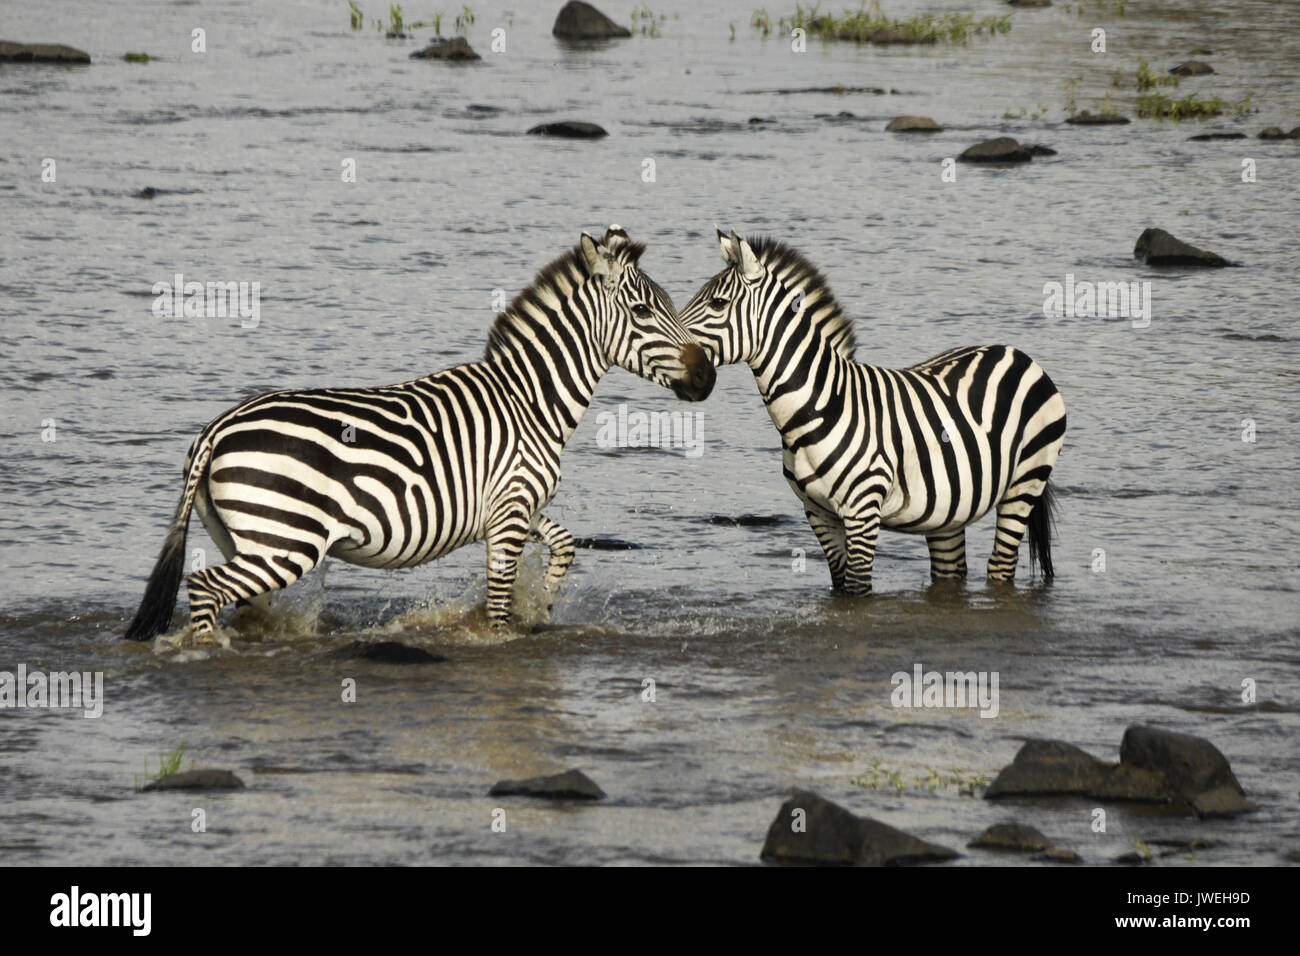 Burchell's (common or plains) zebras in Mara River, Masai Mara Game Reserve, Kenya Stock Photo